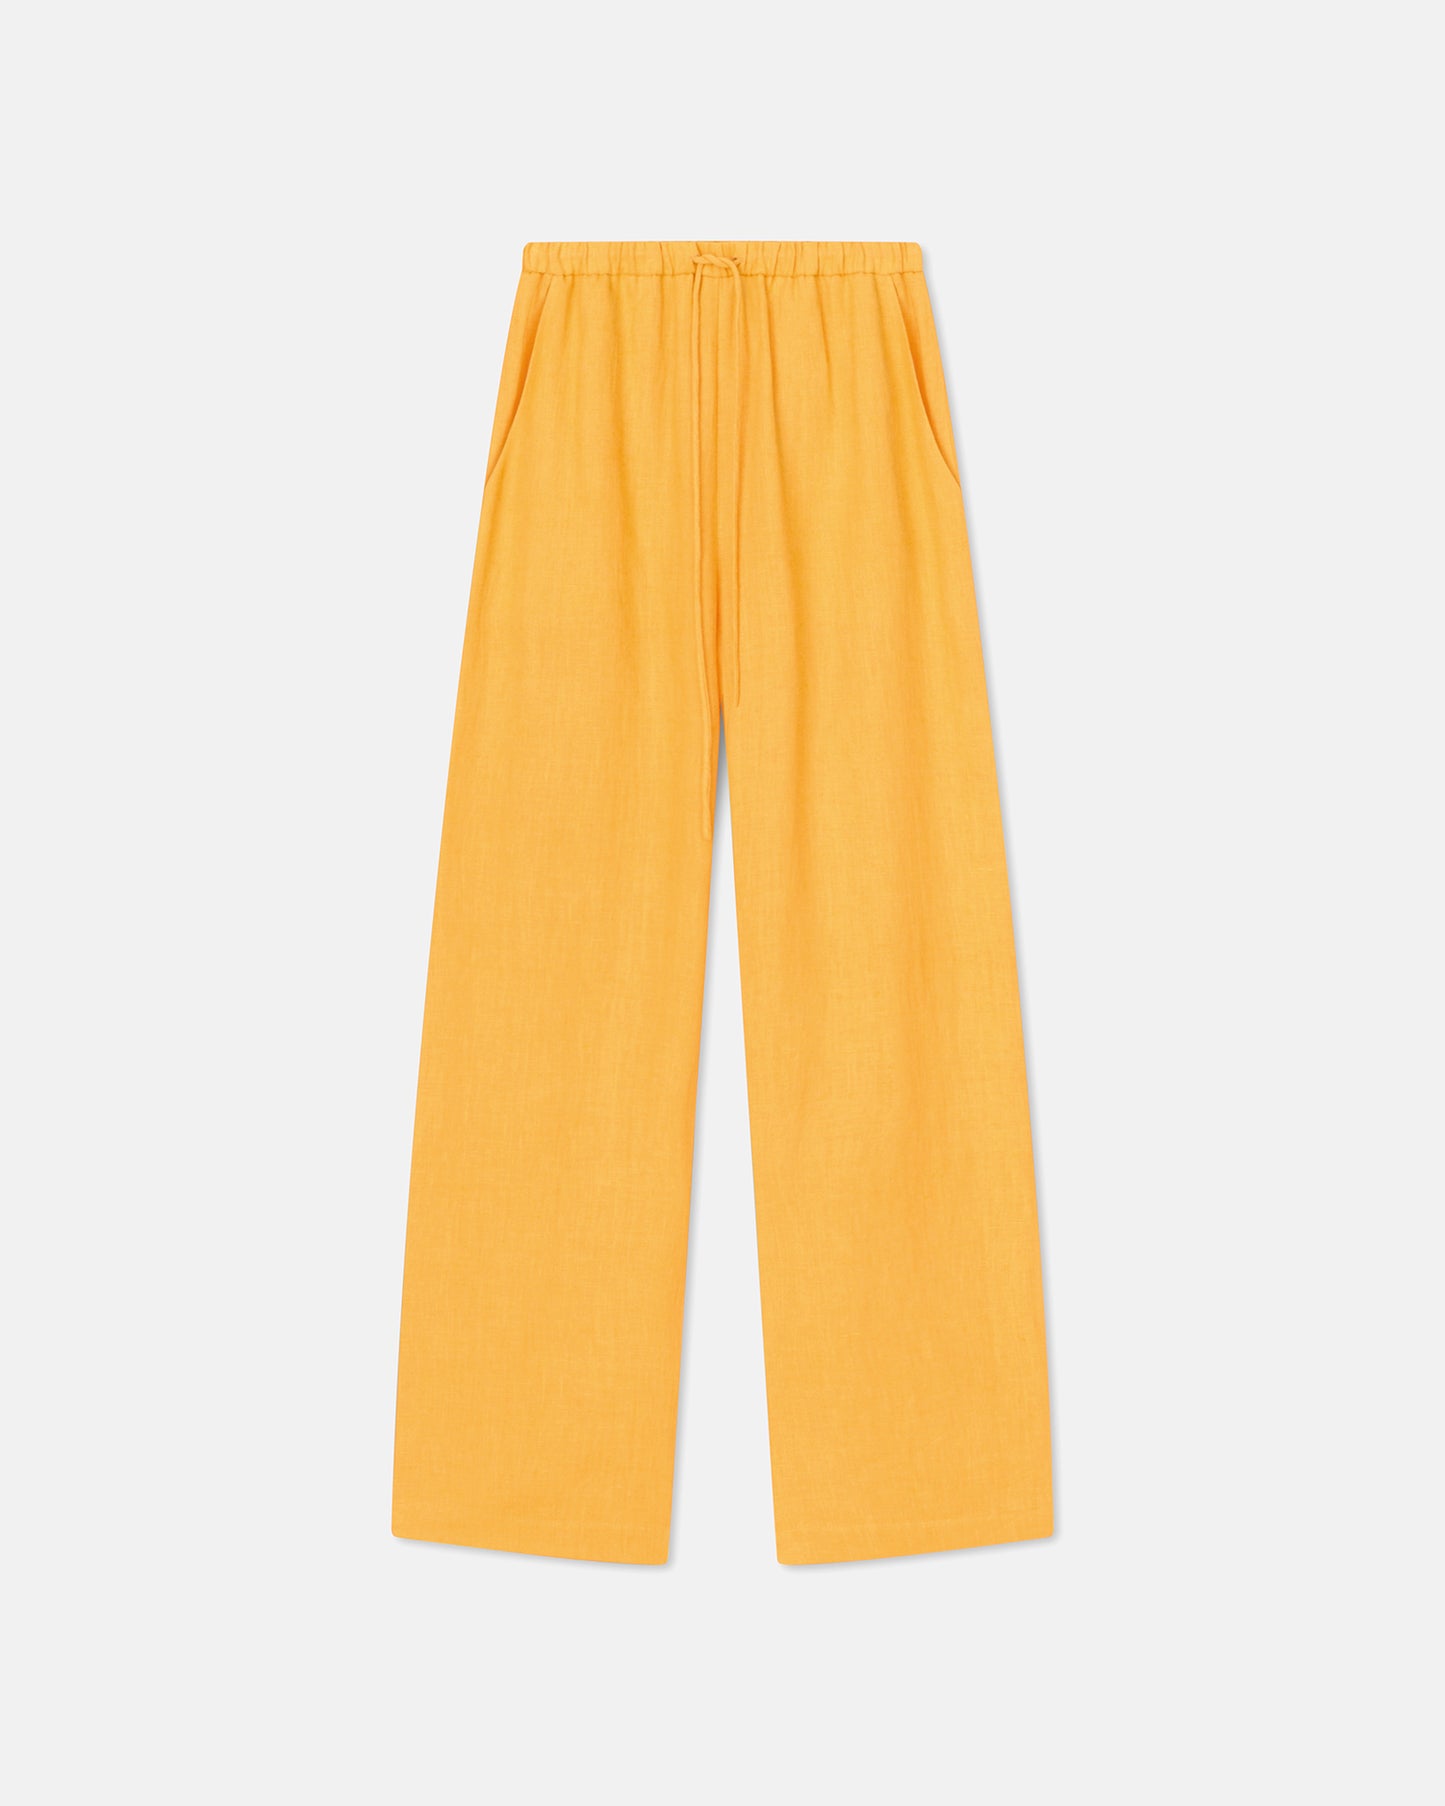 Polyka - Sale Linen Pants - Orange Pf23 – Nanushka